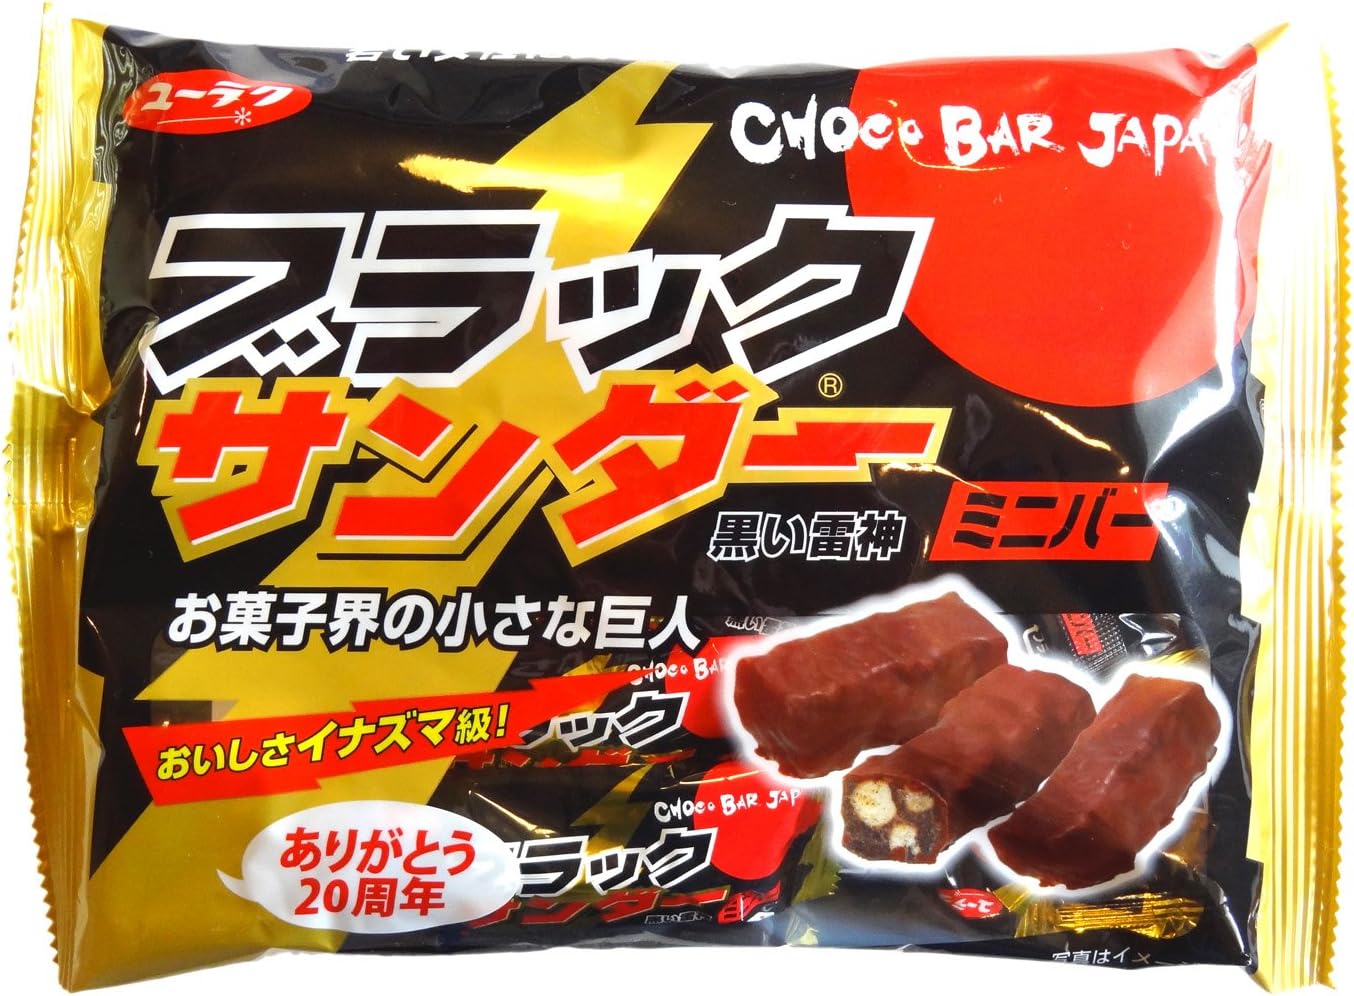 Yuraku Black Thunder Chocolate Mini Bar (196g)